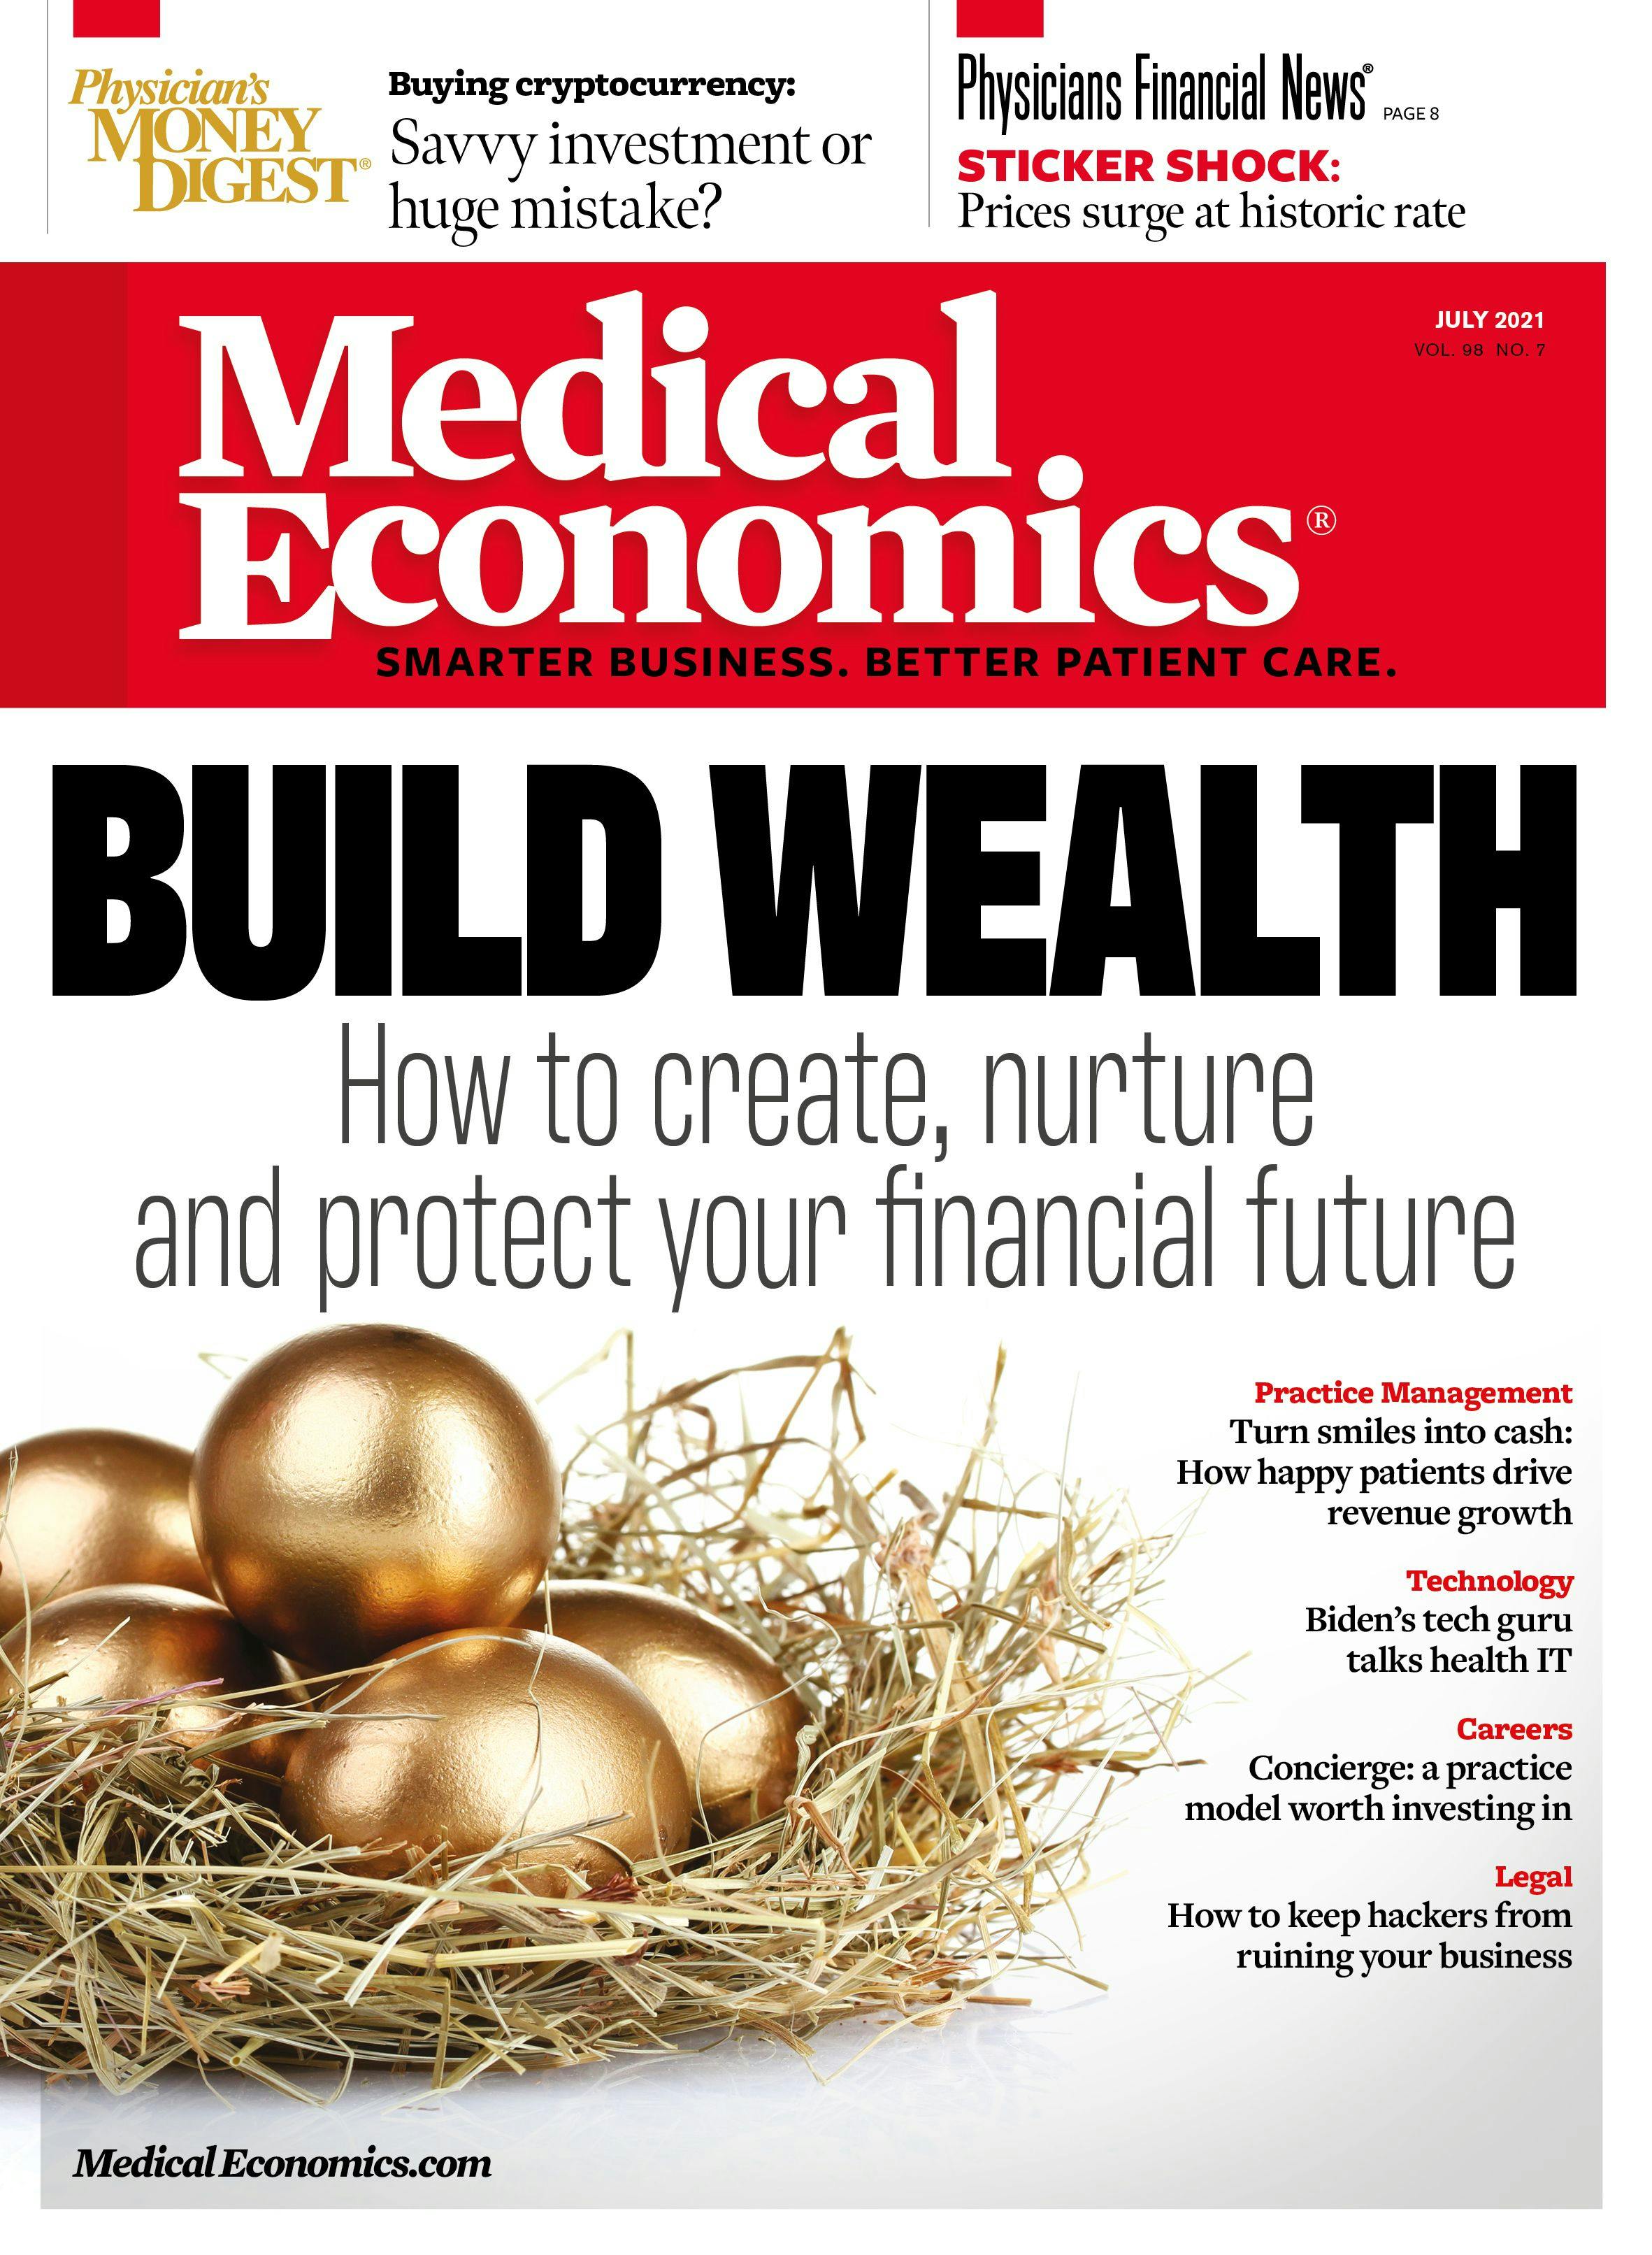 Medical Economics July 2021 issue